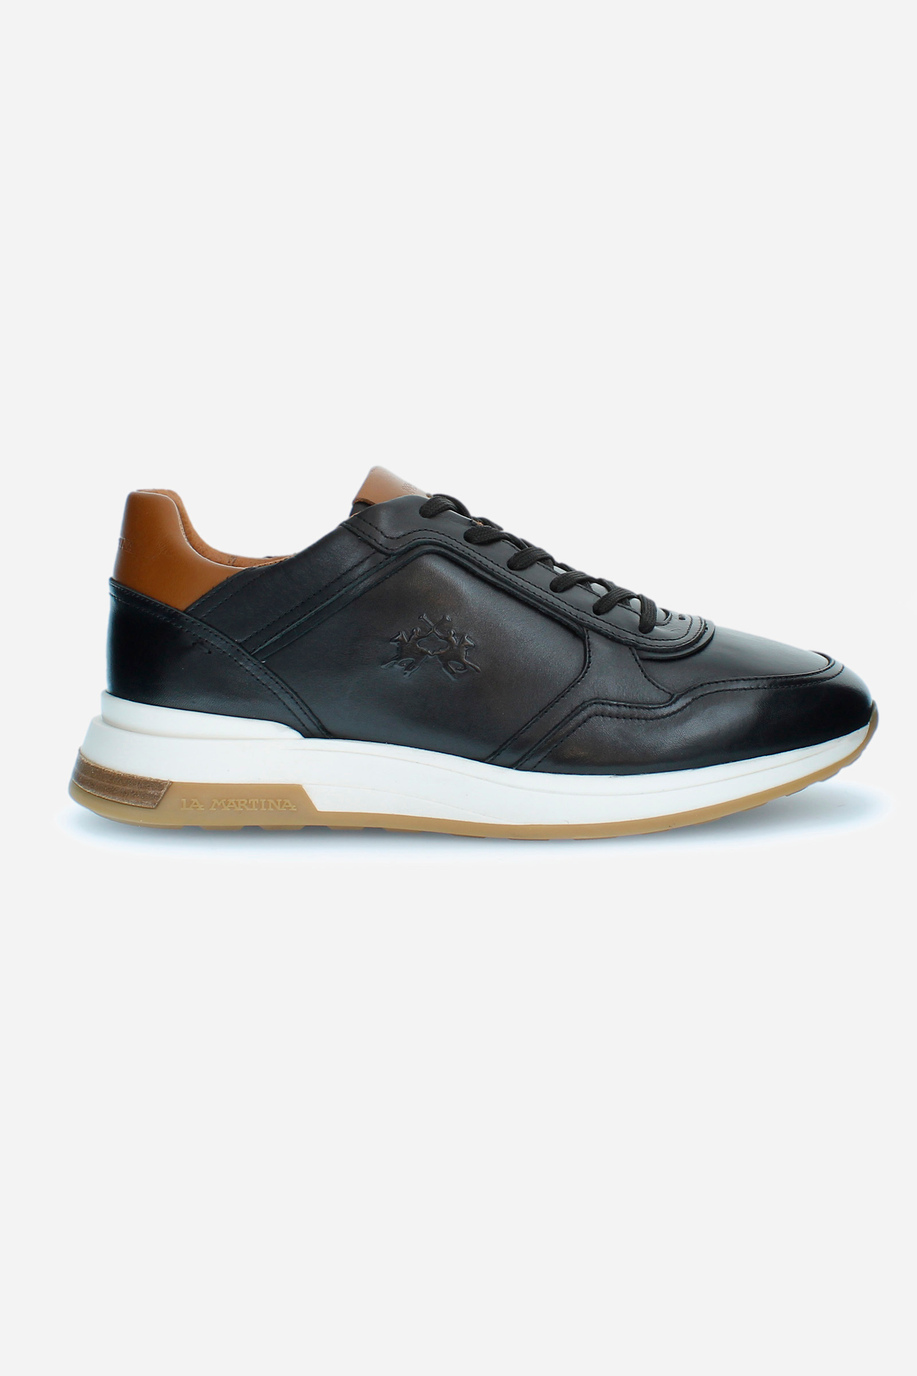 Men's trainers with raised sole - Man shoes | La Martina - Official Online Shop